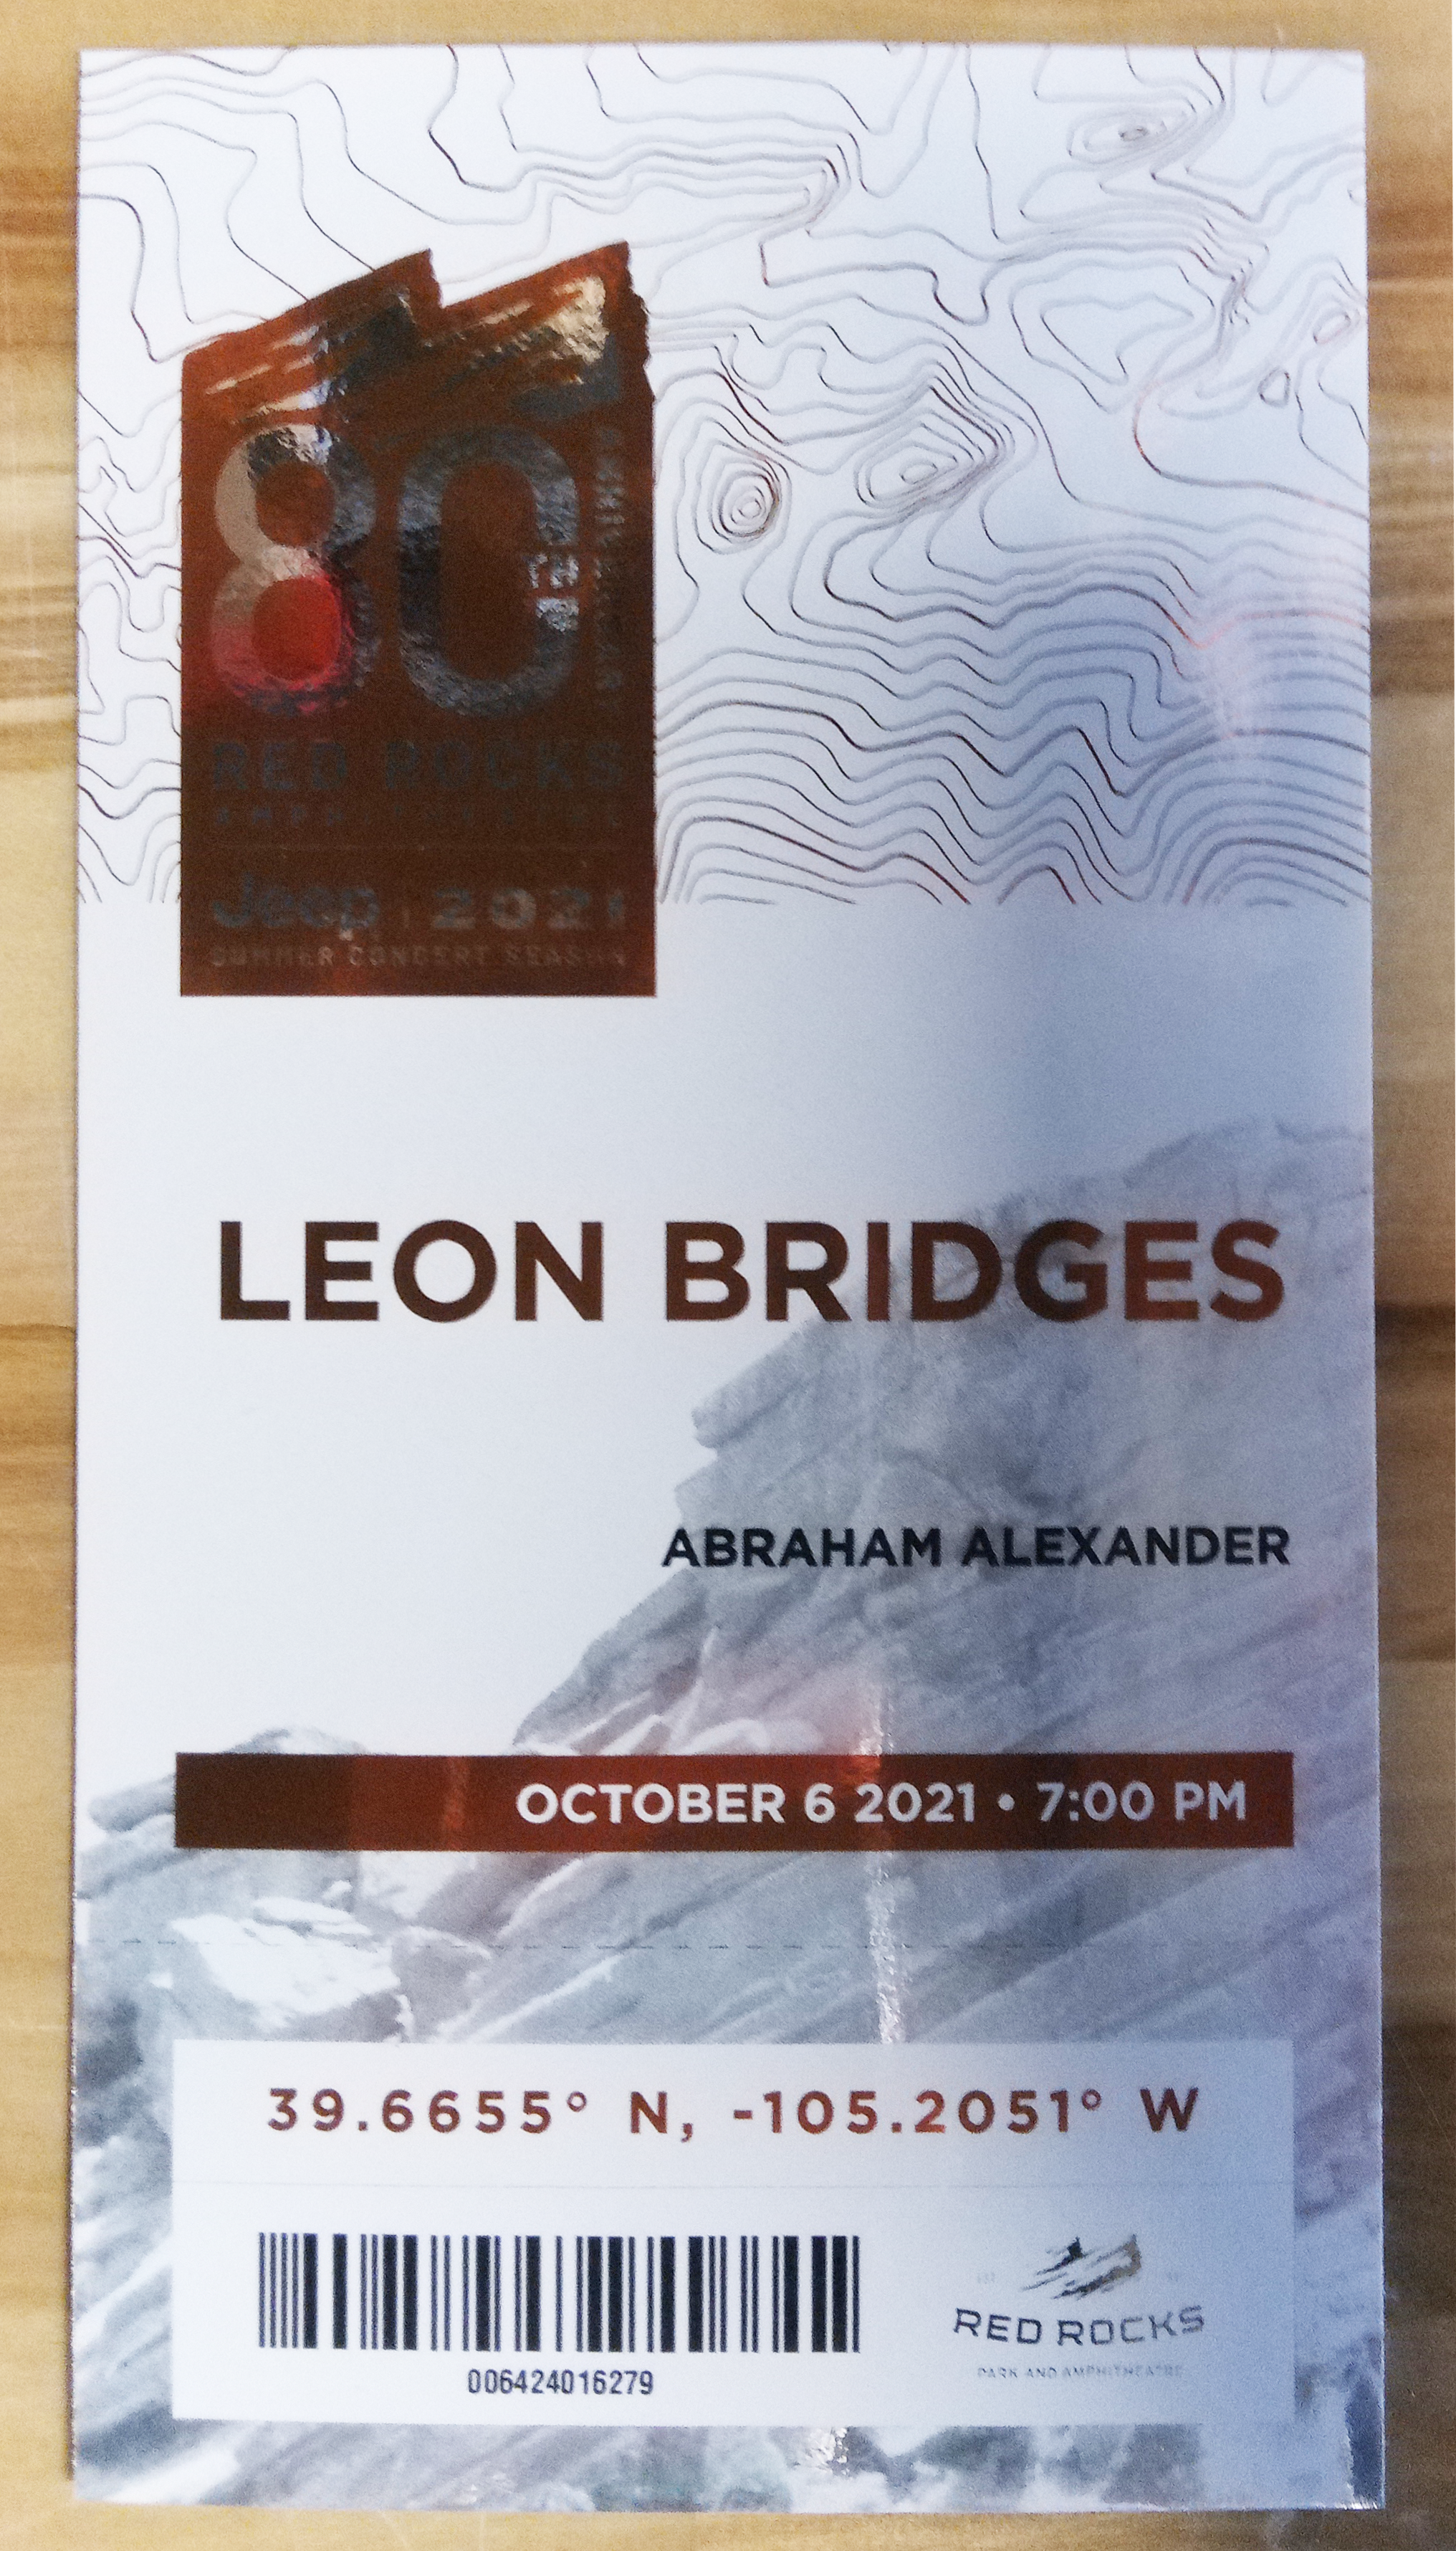 Leon Bridges and Abraham Alexander - Ticket stub - 10/6/2021 at Red Rocks